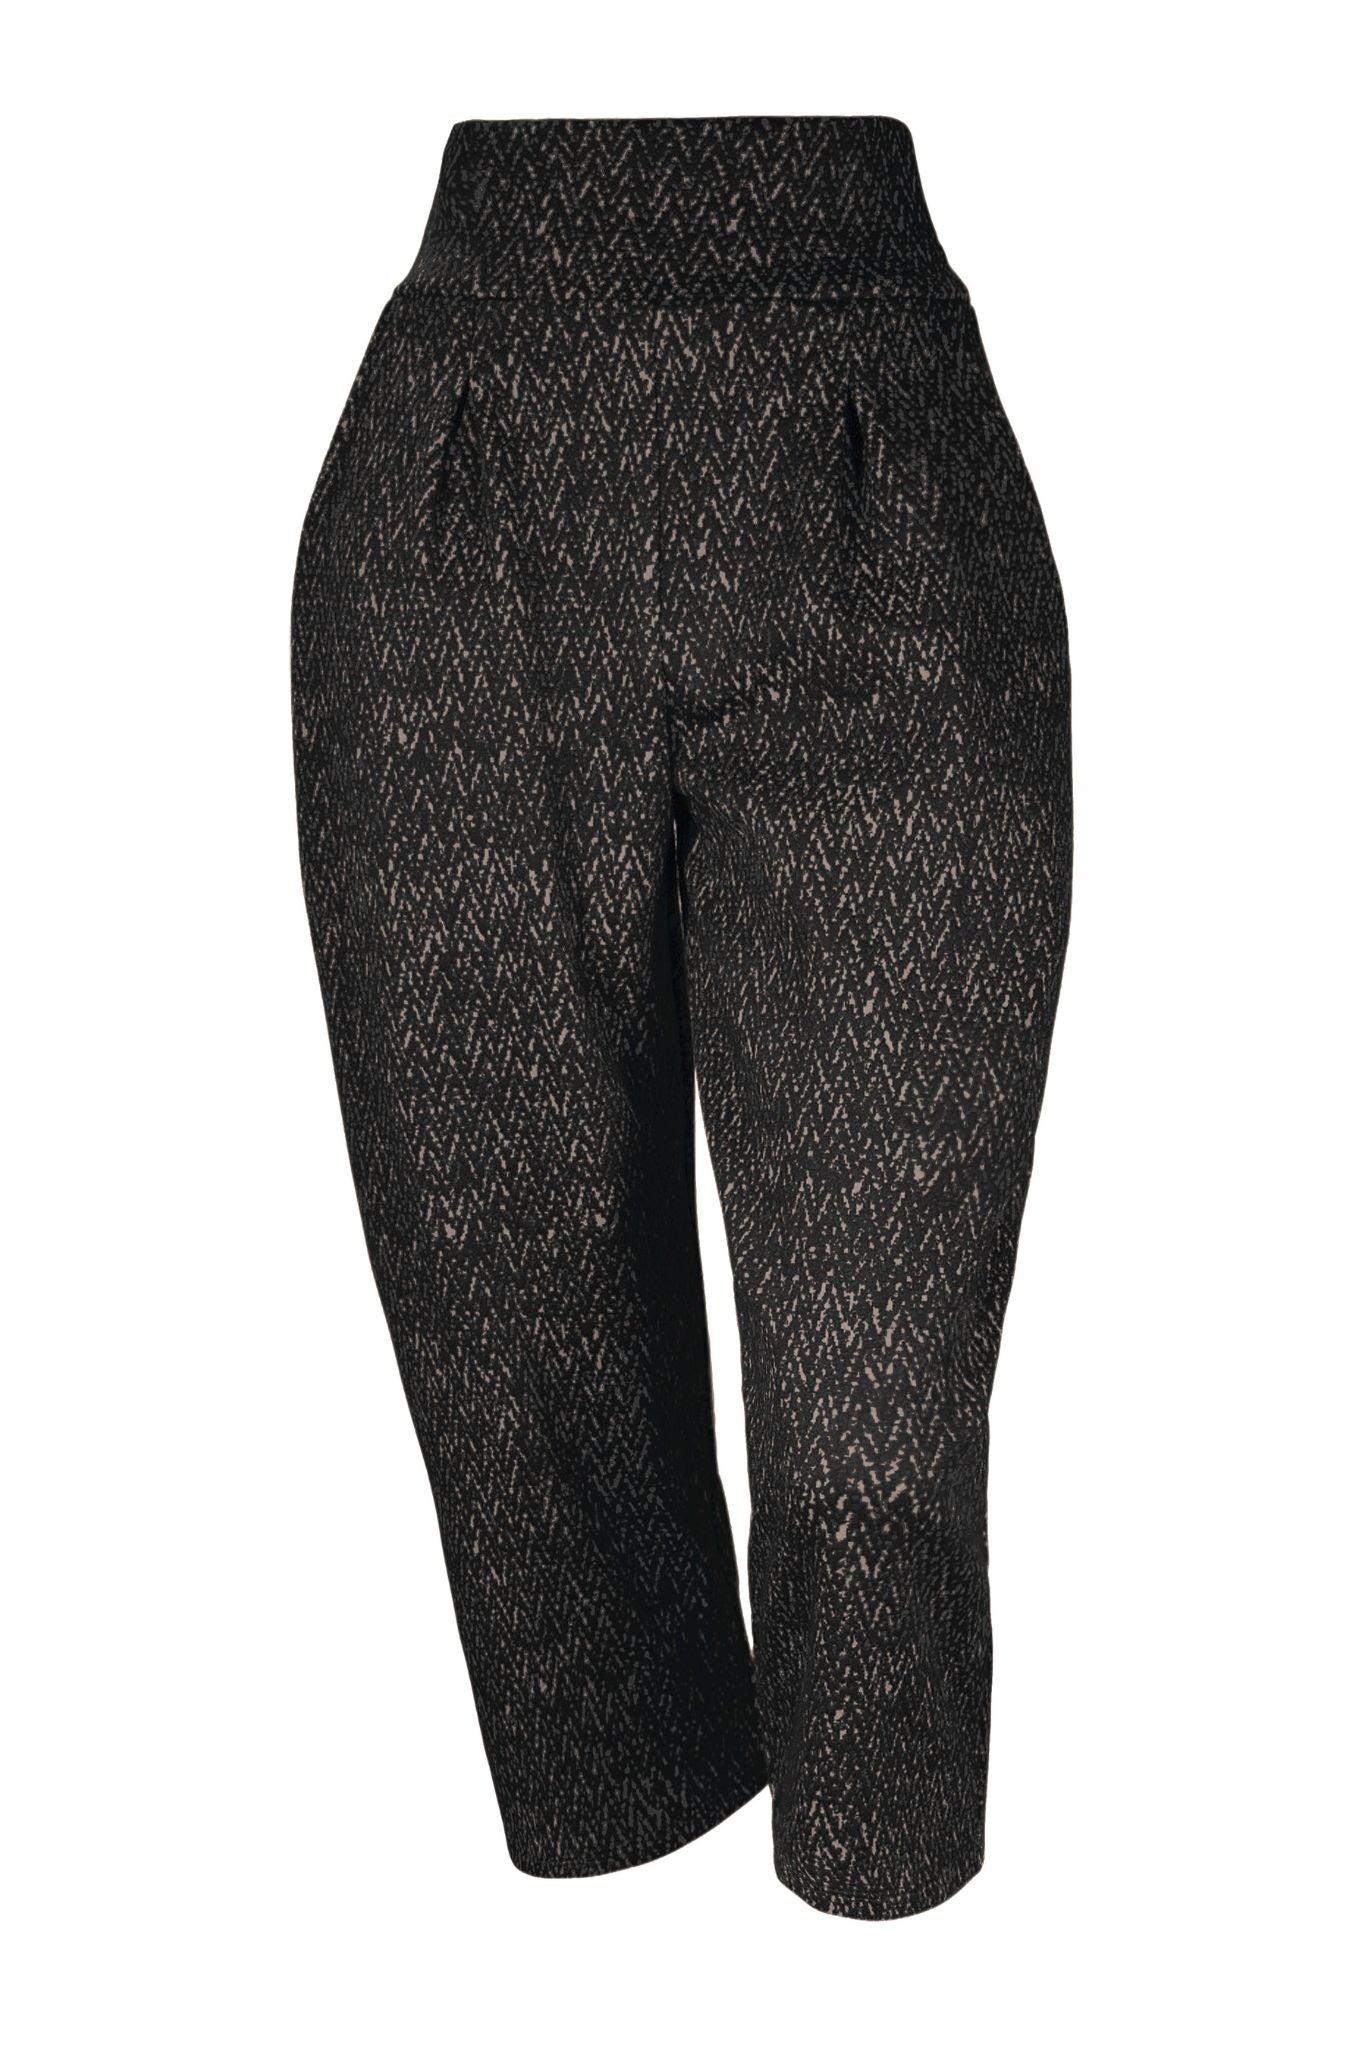 MELISSA NEPTON, Pants & Jumpsuits, Melissa Nepton Black Leggings Pants  With Tuxedo Silver Stripe Size Small